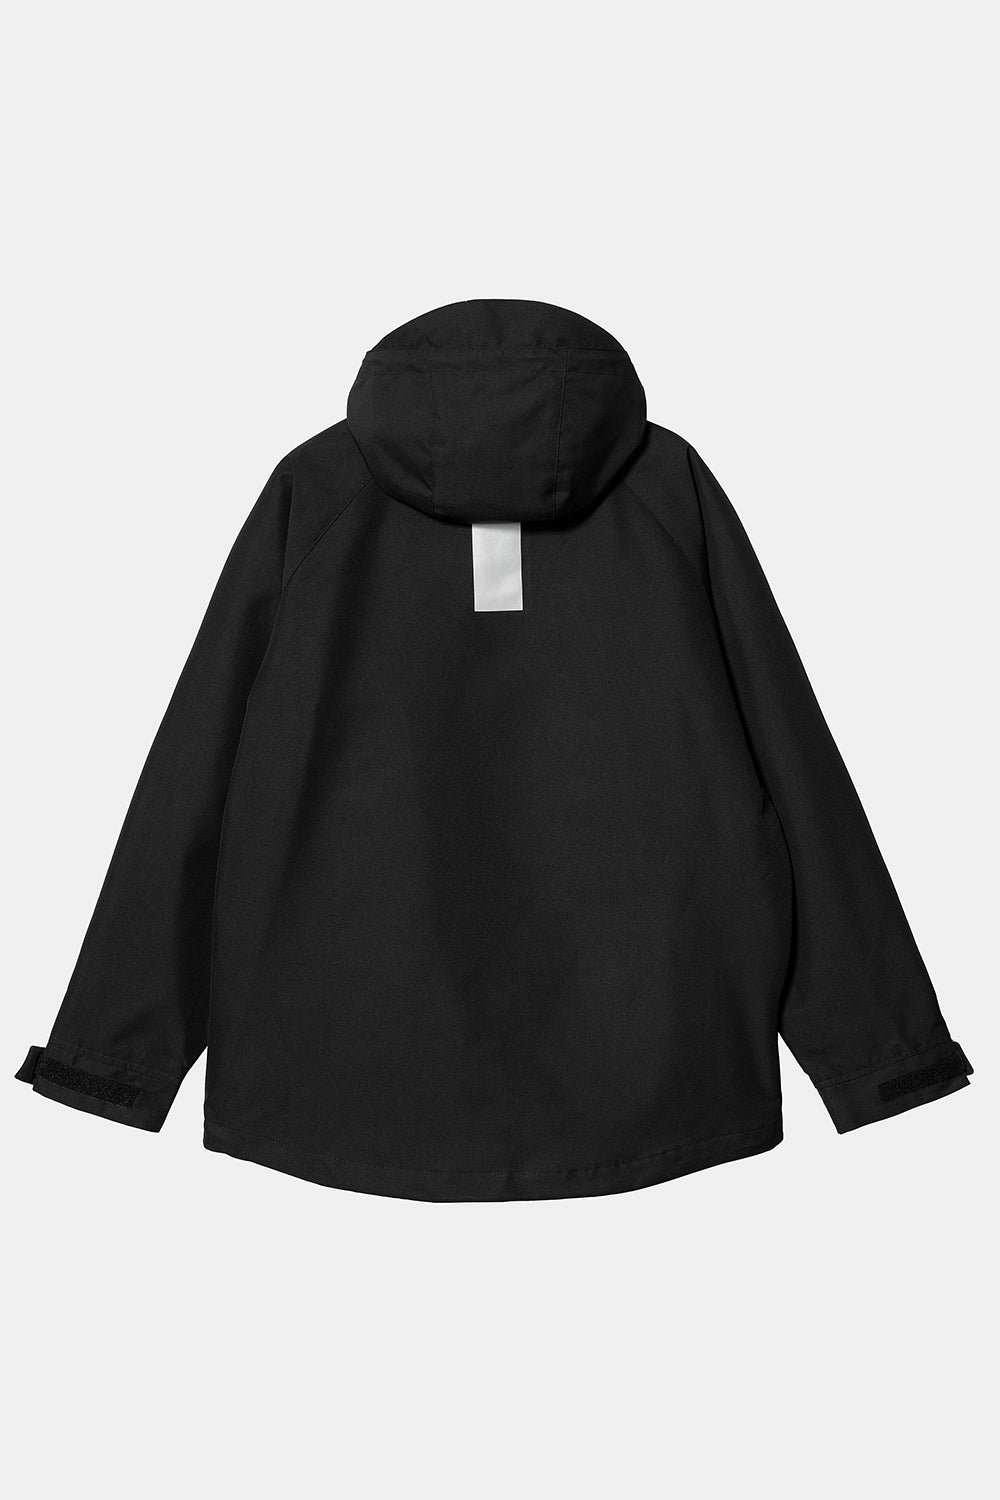 Carhartt WIP Alto Jacket (Black) | Number Six